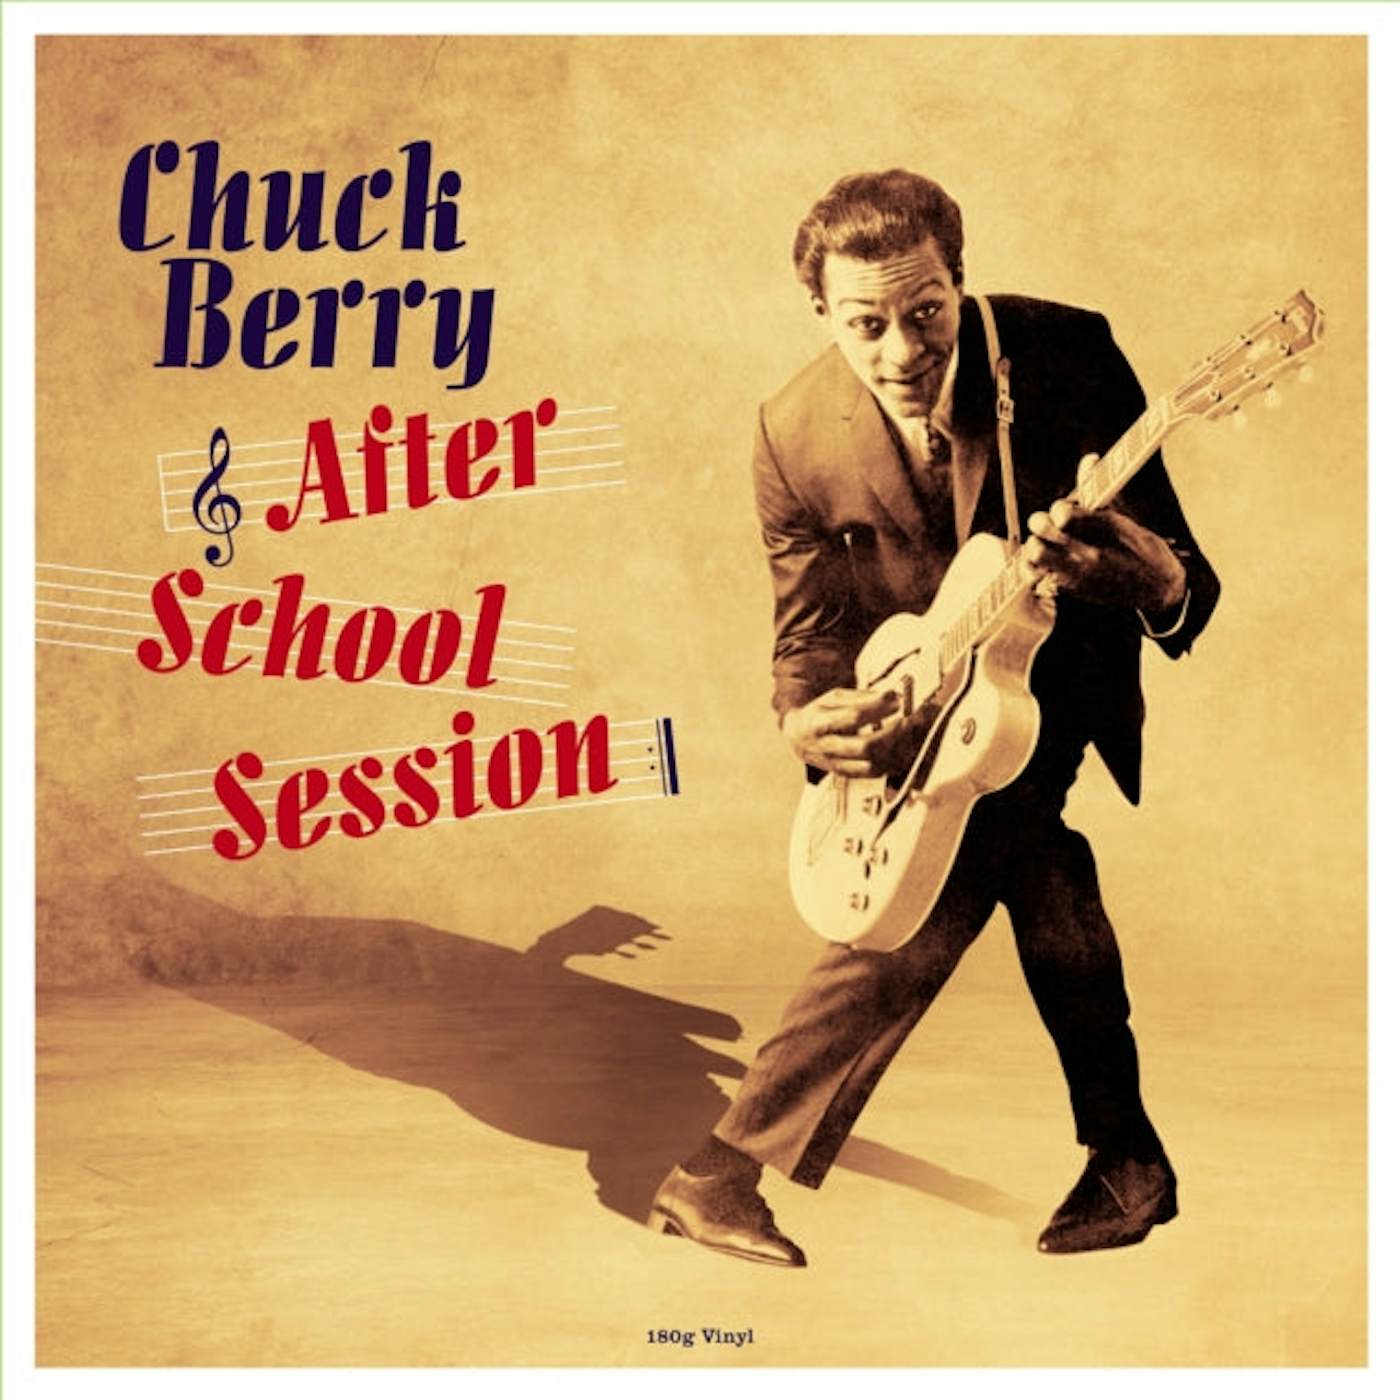 Chuck Berry LP - After School Session (Vinyl)